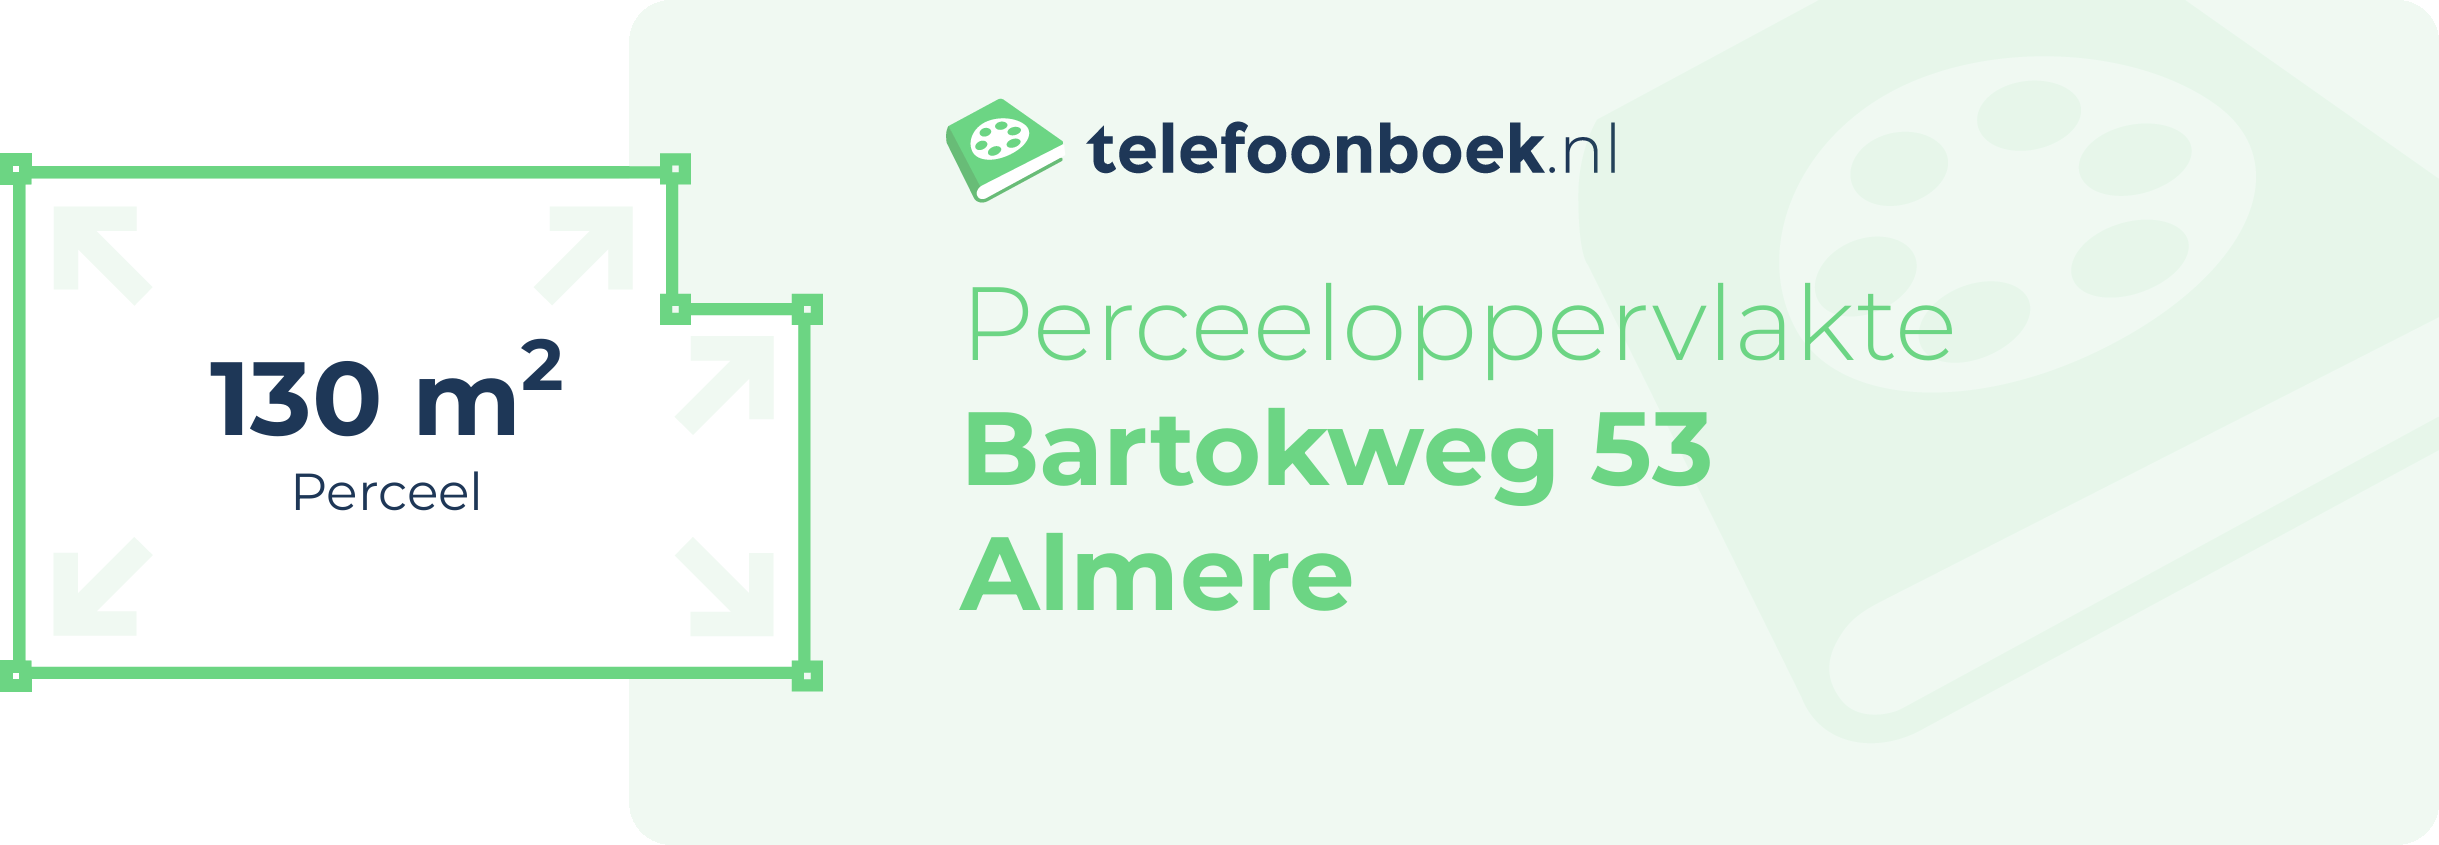 Perceeloppervlakte Bartokweg 53 Almere